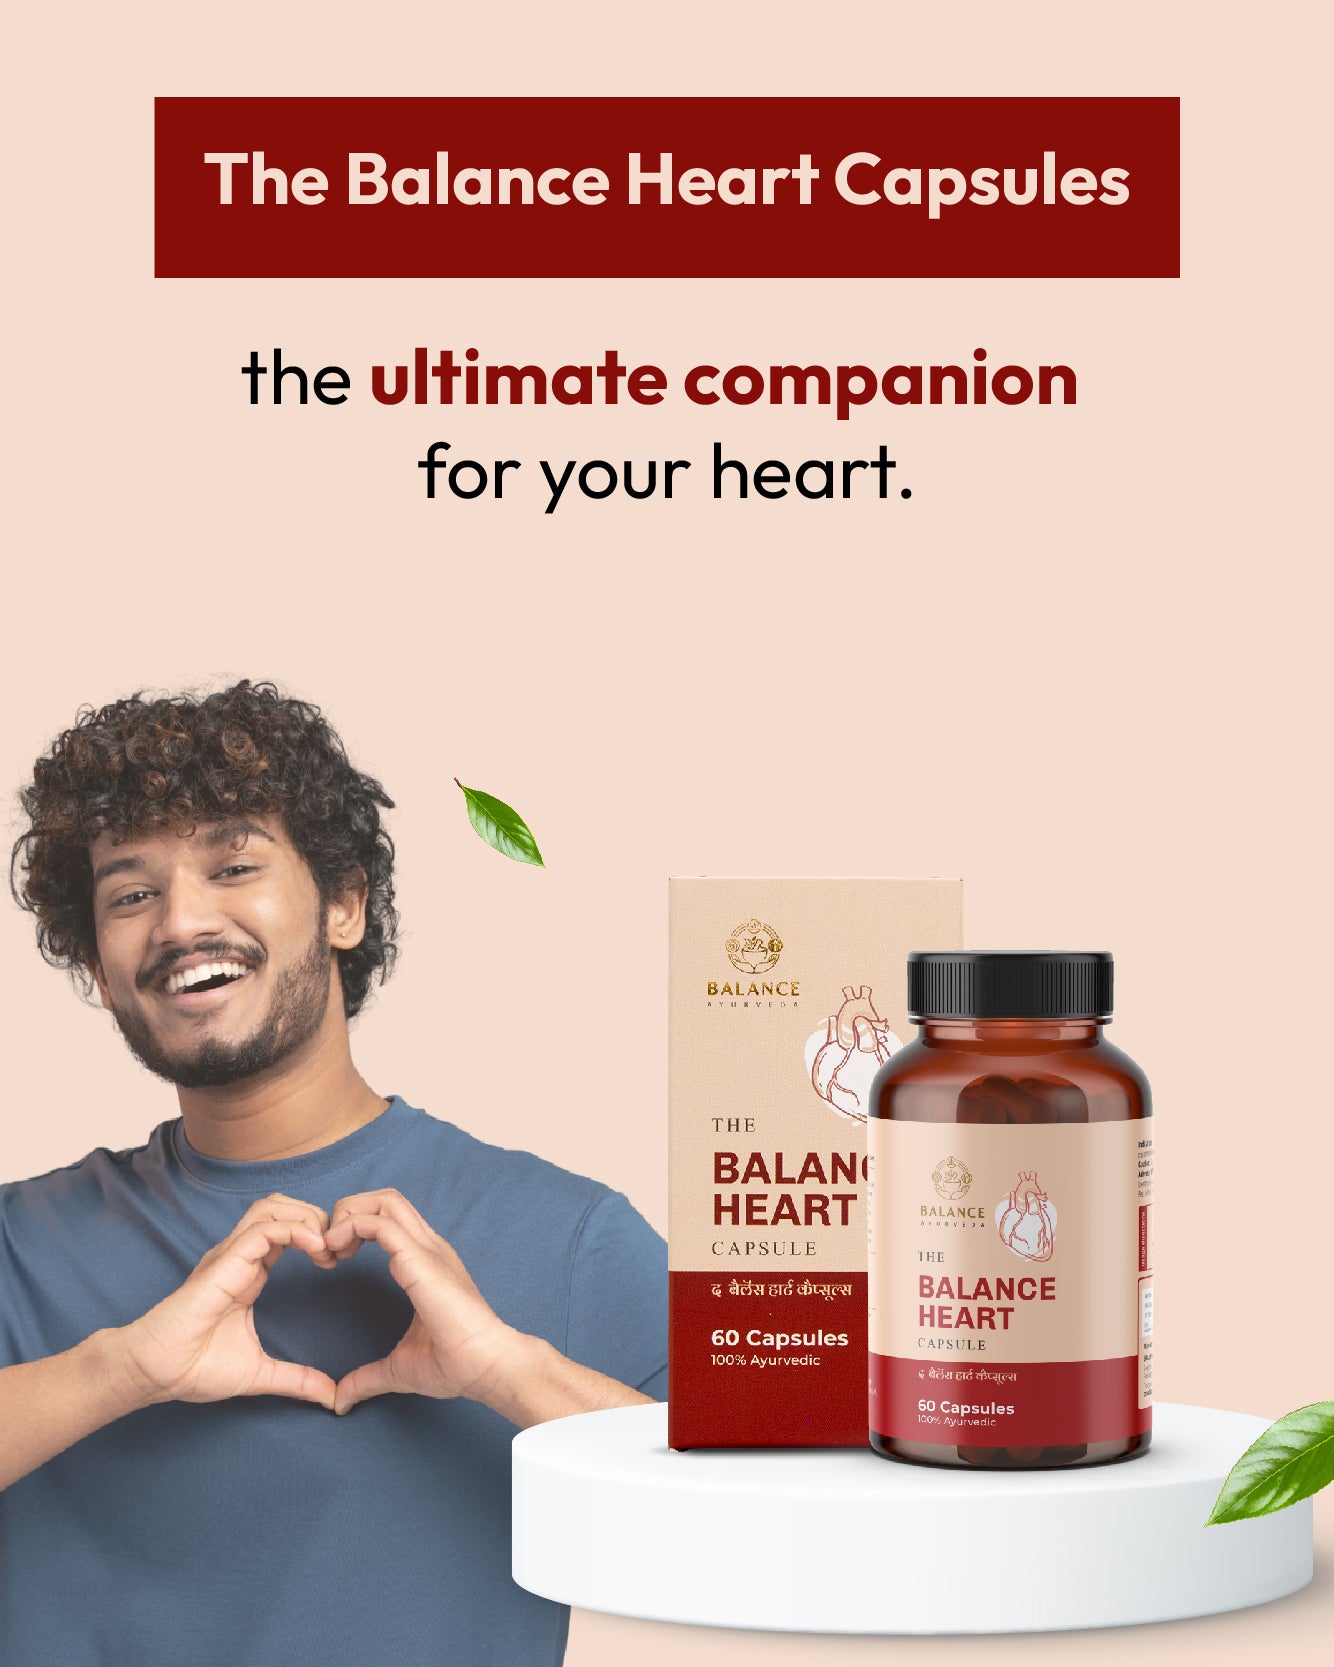 The Balance Heart Capsules